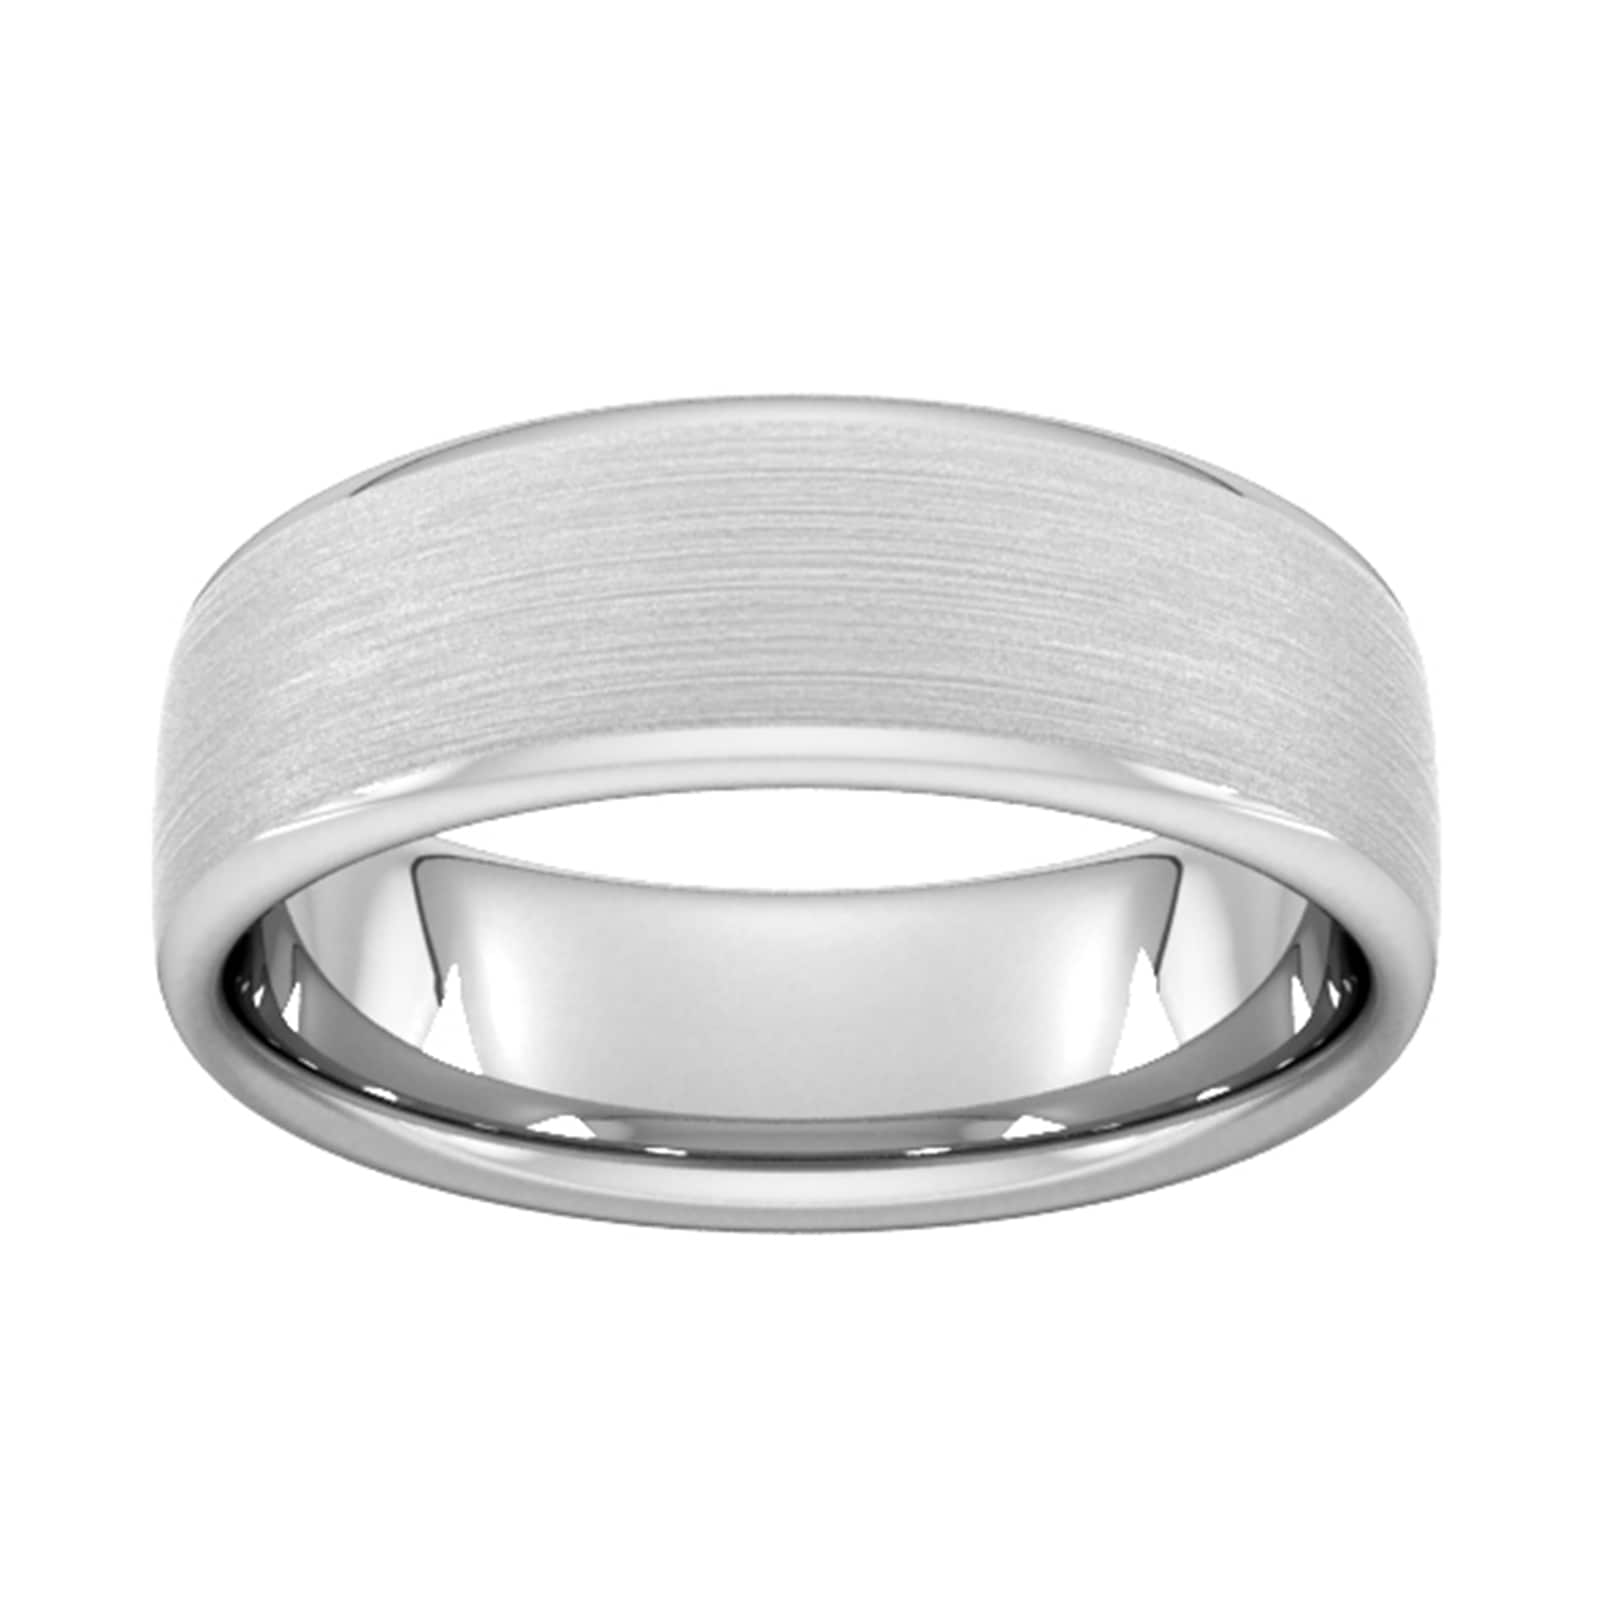 7mm Slight Court Standard Matt Finished Wedding Ring In 9 Carat White Gold - Ring Size S